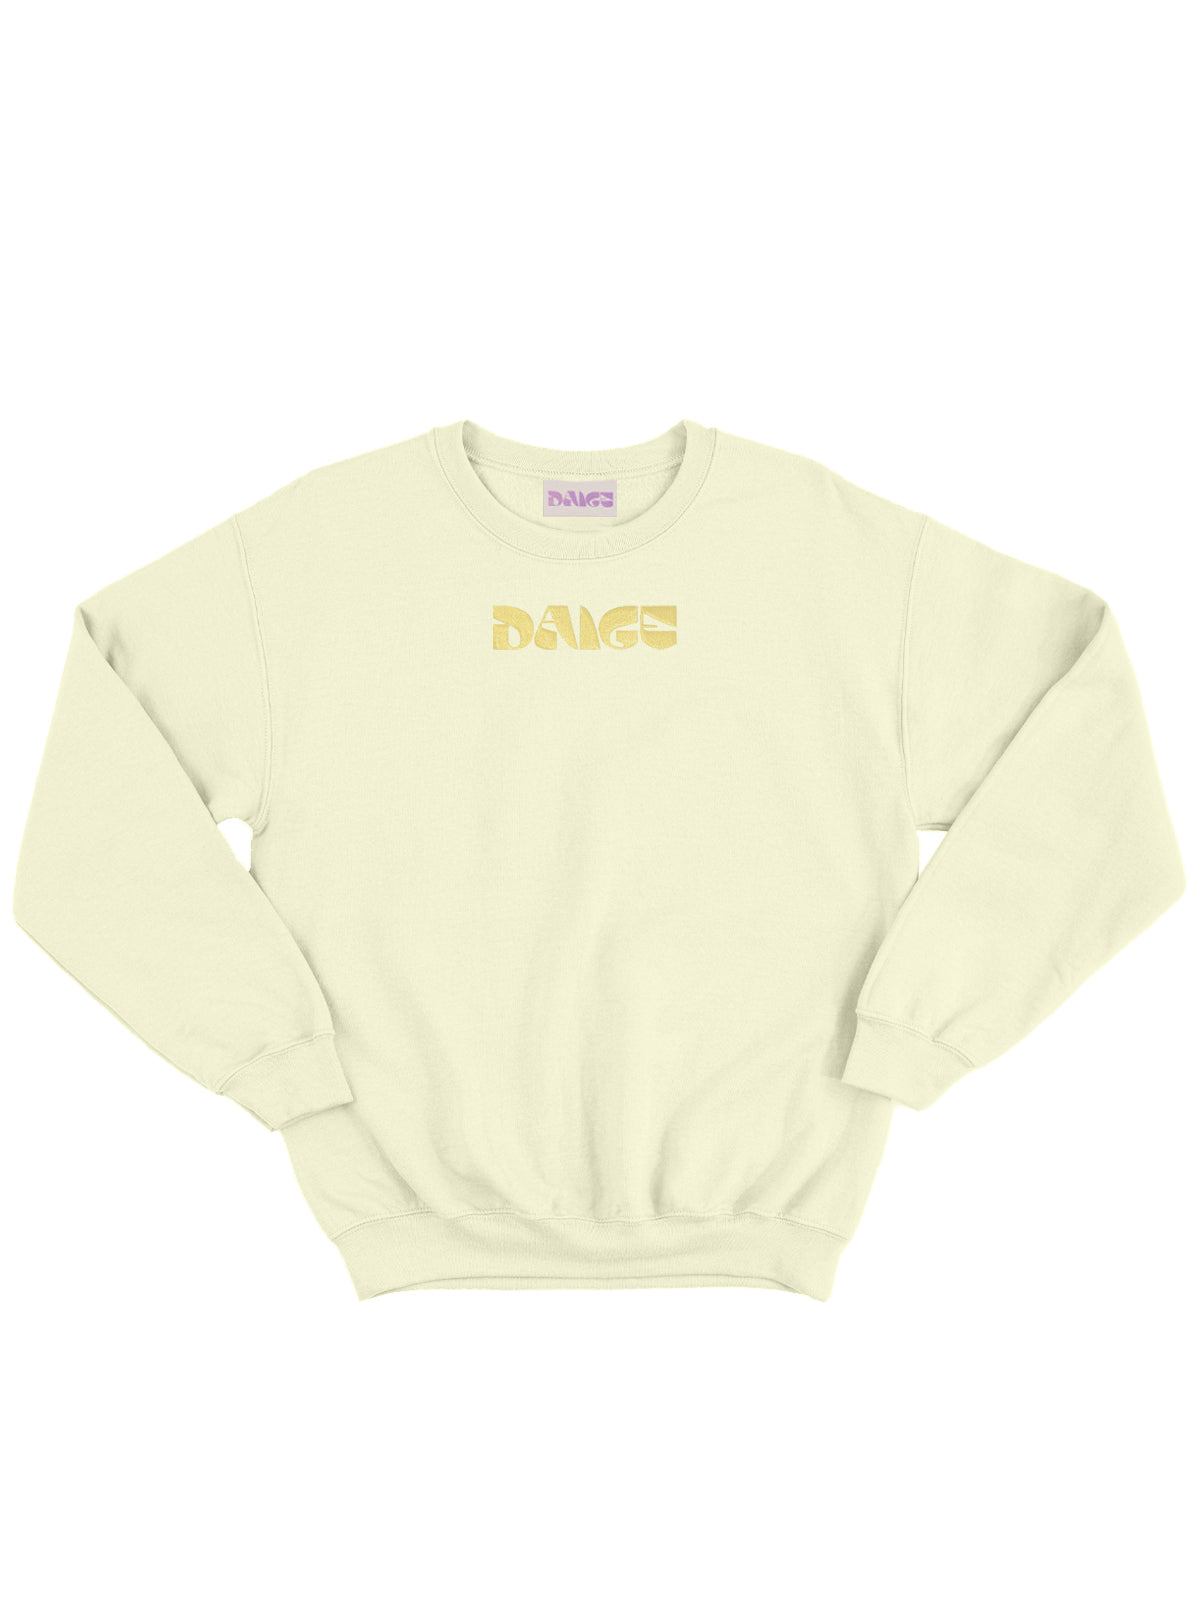 DAIGE logo sweater - Vanilla milkshake